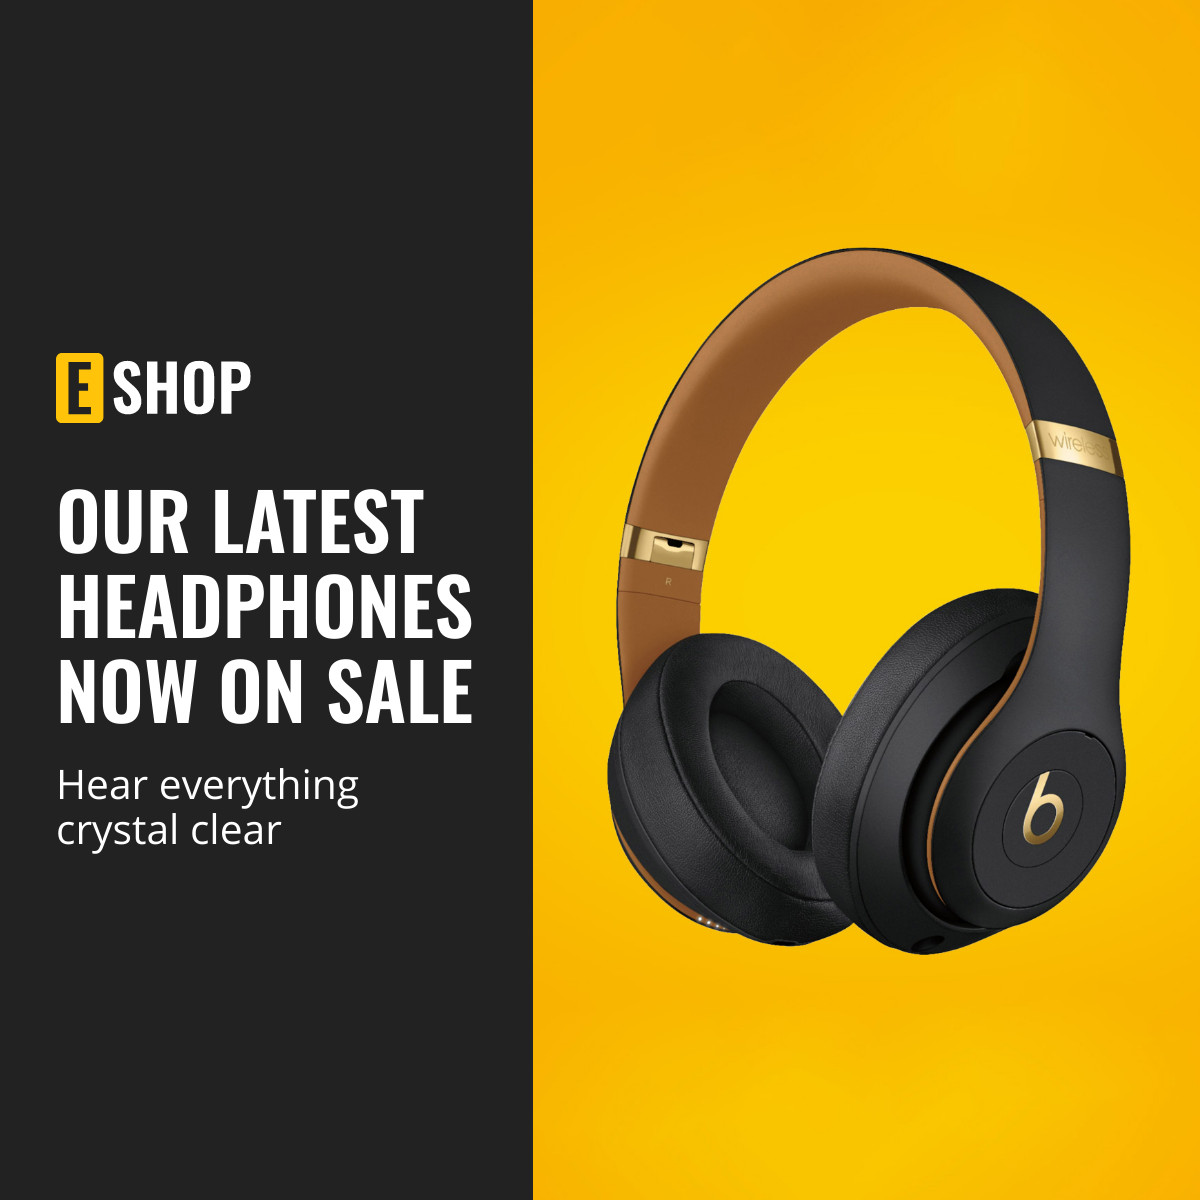 Latest Headphones Now on Sale Inline Rectangle 300x250